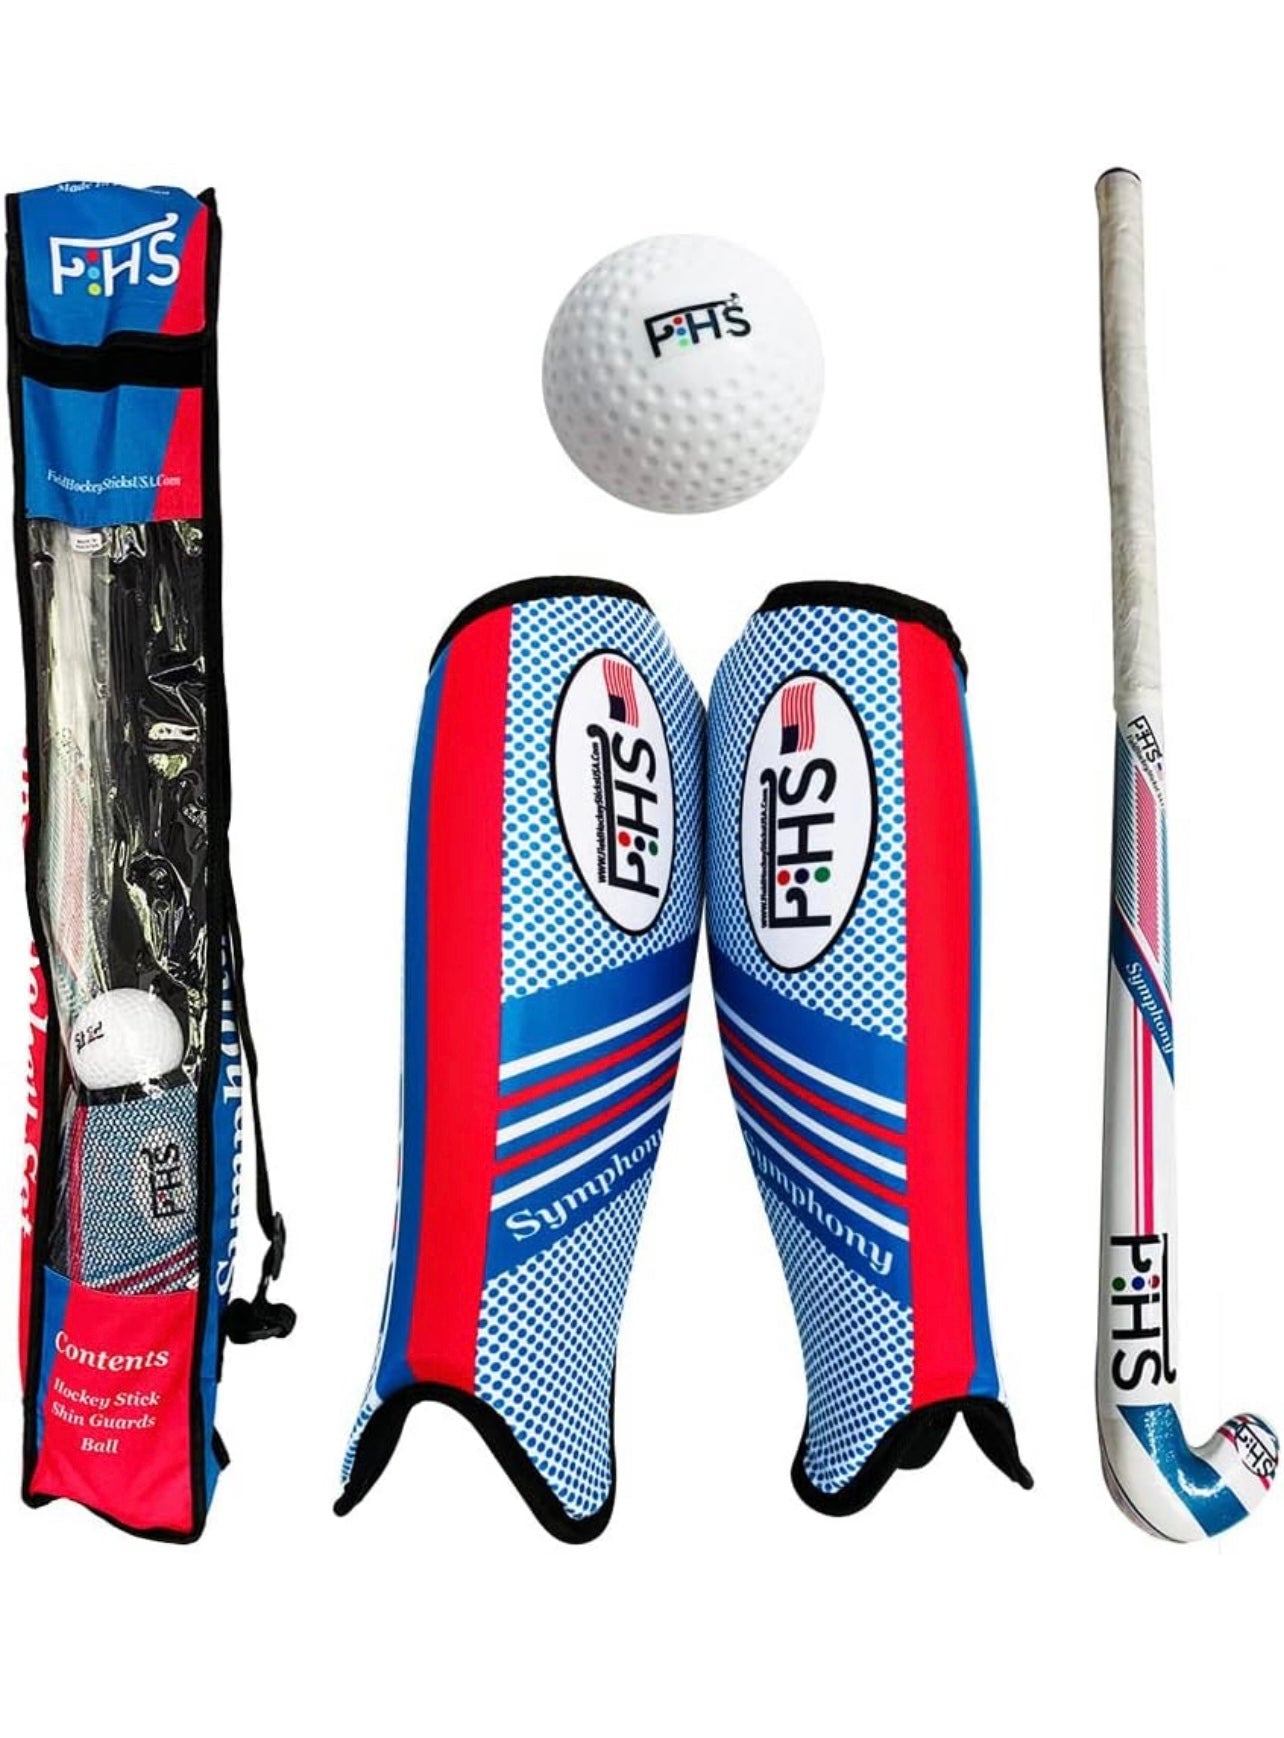 Beginner Field Hockey Stick Set Symphony Stick Sizes 30 Inch Shin Guards Hockey Ball Carrying Bag